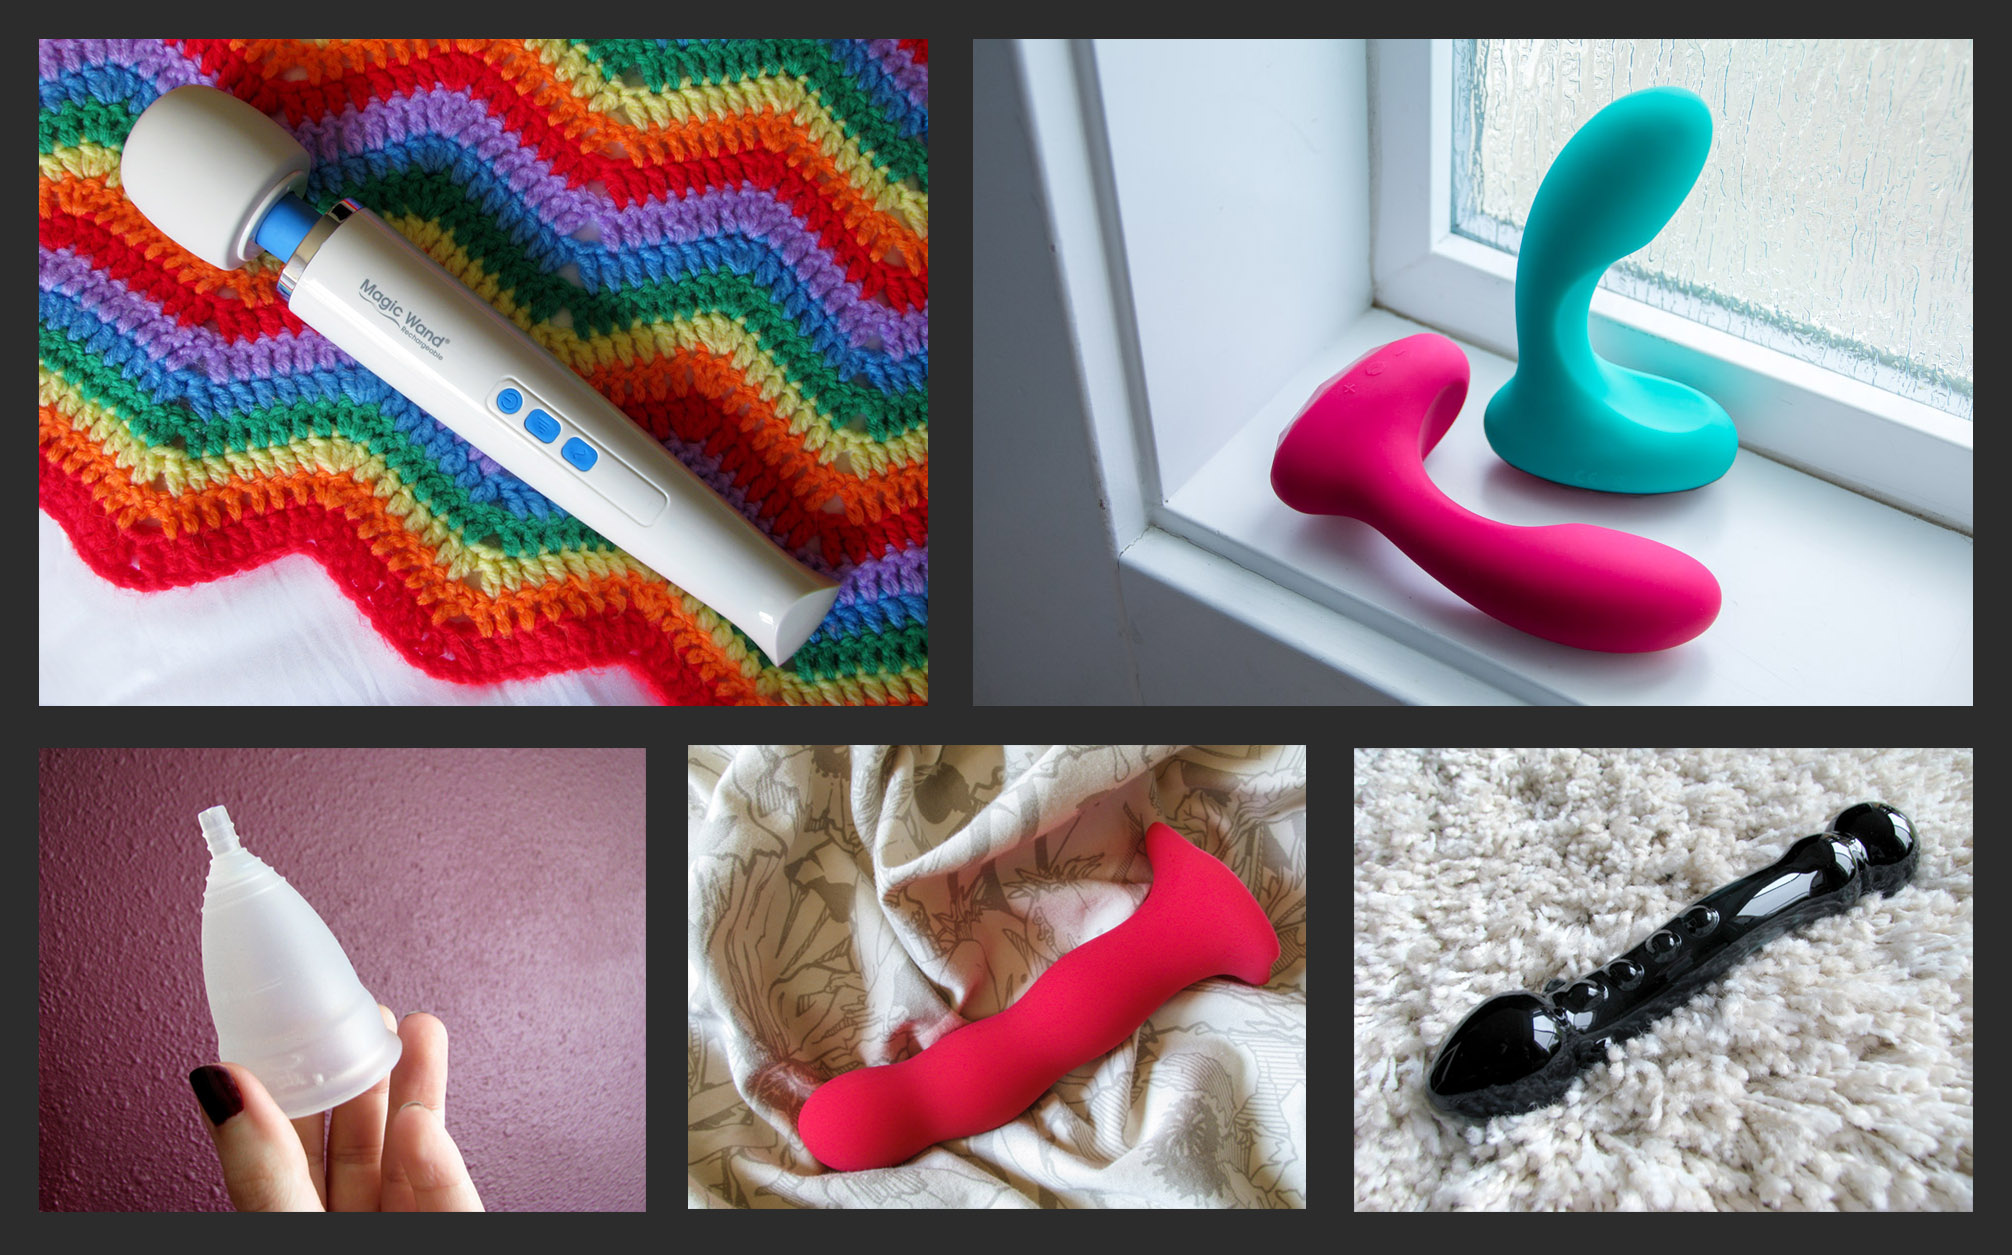 Hitachi Magic Wand Rechargeable vibrator on a zig-zag-patterned rainbow crocheted blanket.